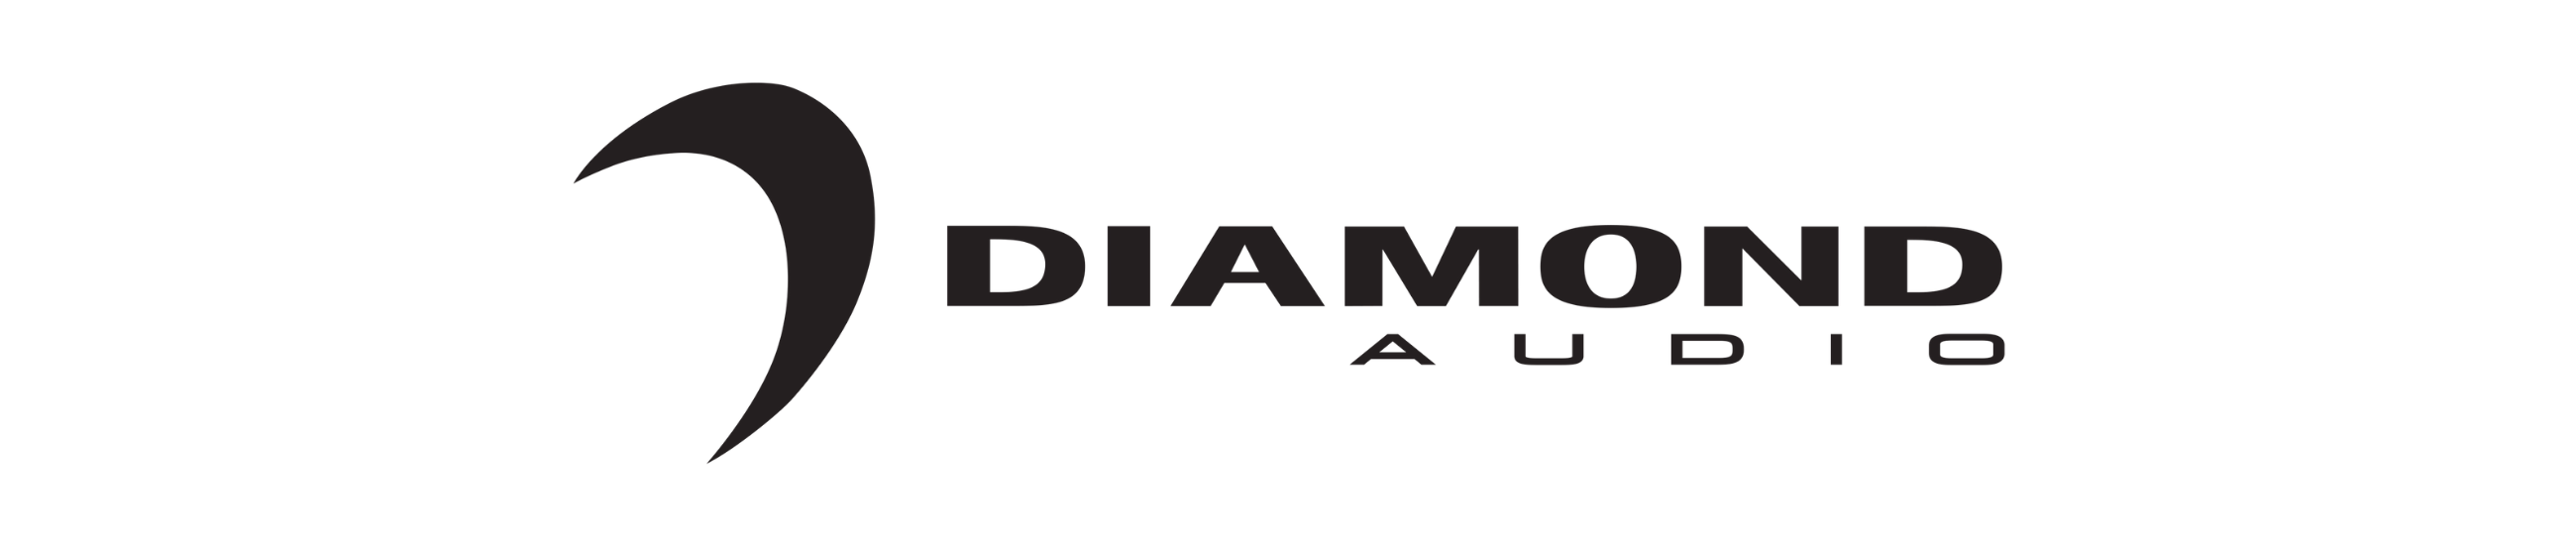 diamond audio logo